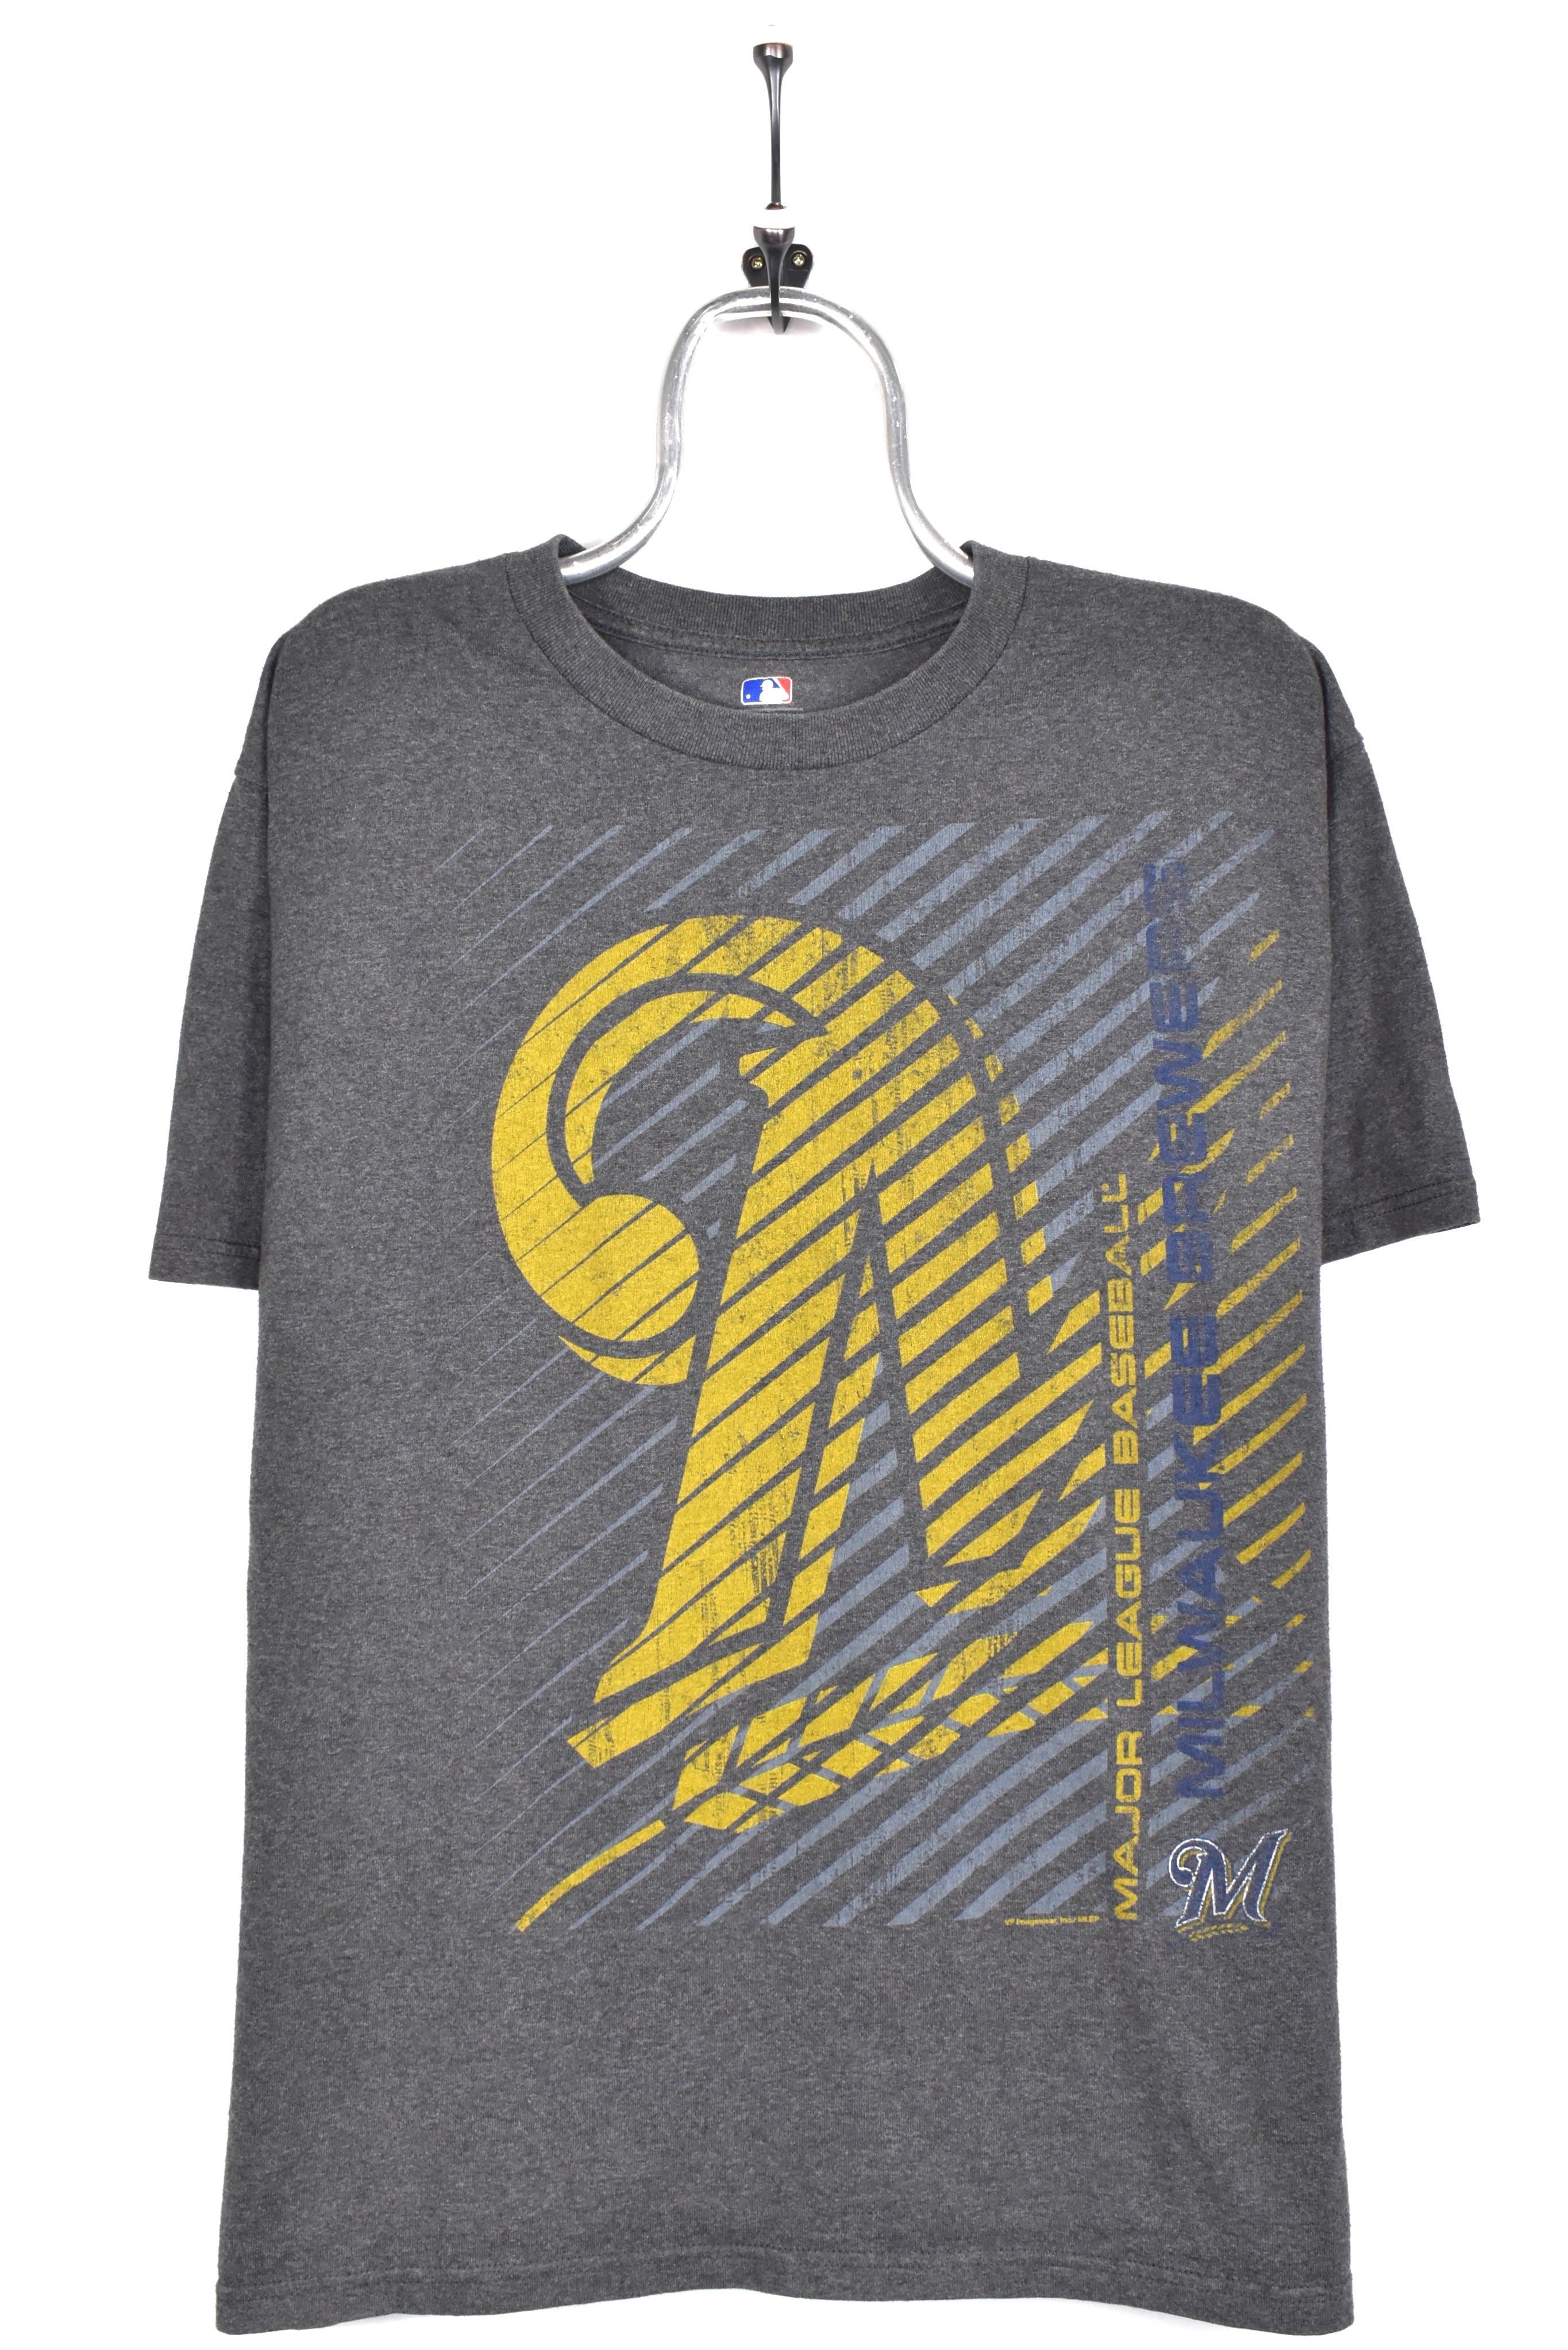 Modern Milwaukee Brewers shirt, MLB grey graphic tee - AU Large PRO SPORT